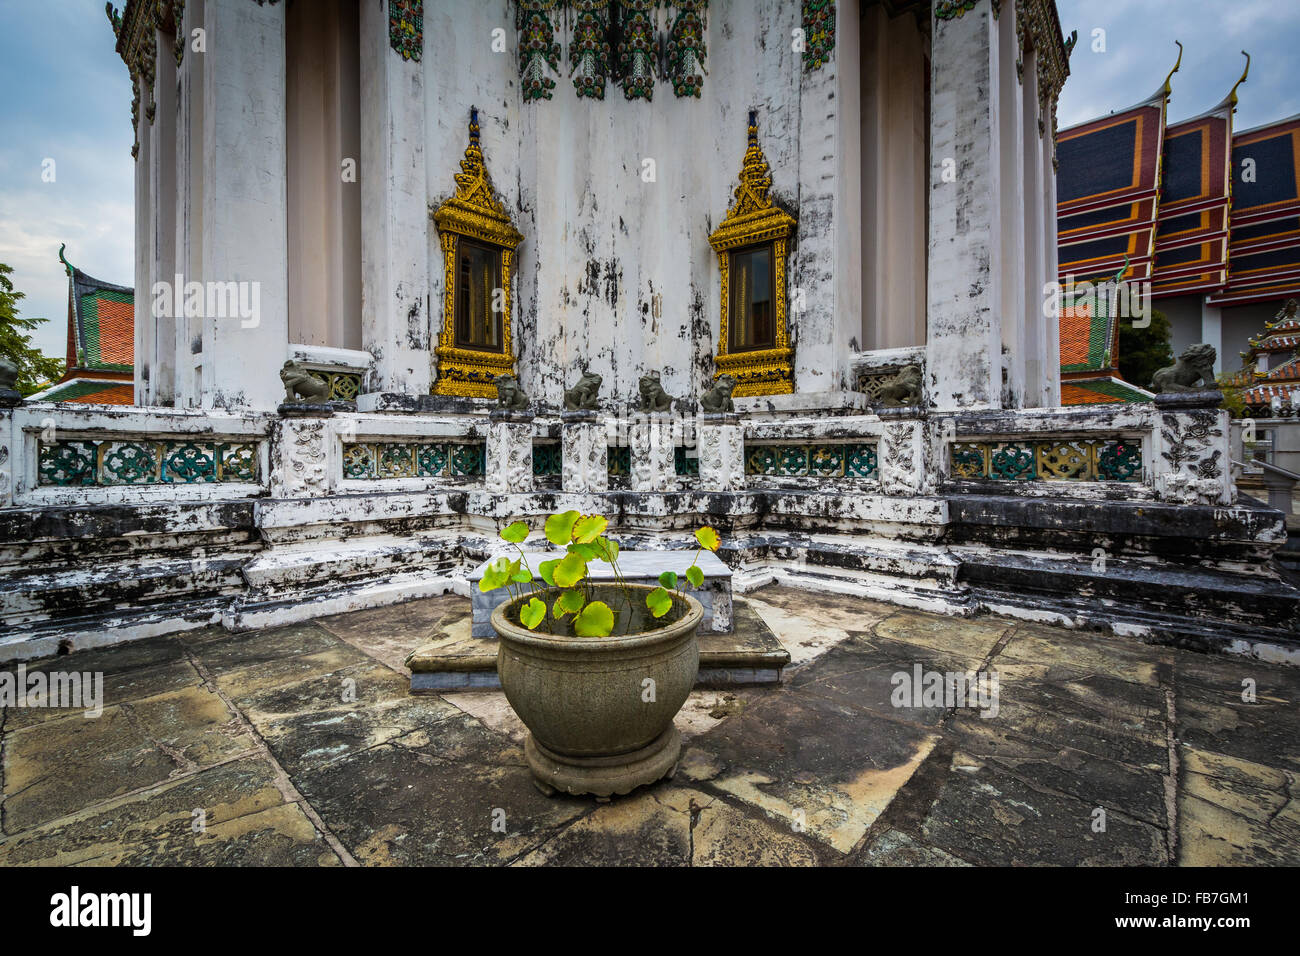 La storica Wat Pho tempio buddista, a Bangkok, in Thailandia. Foto Stock